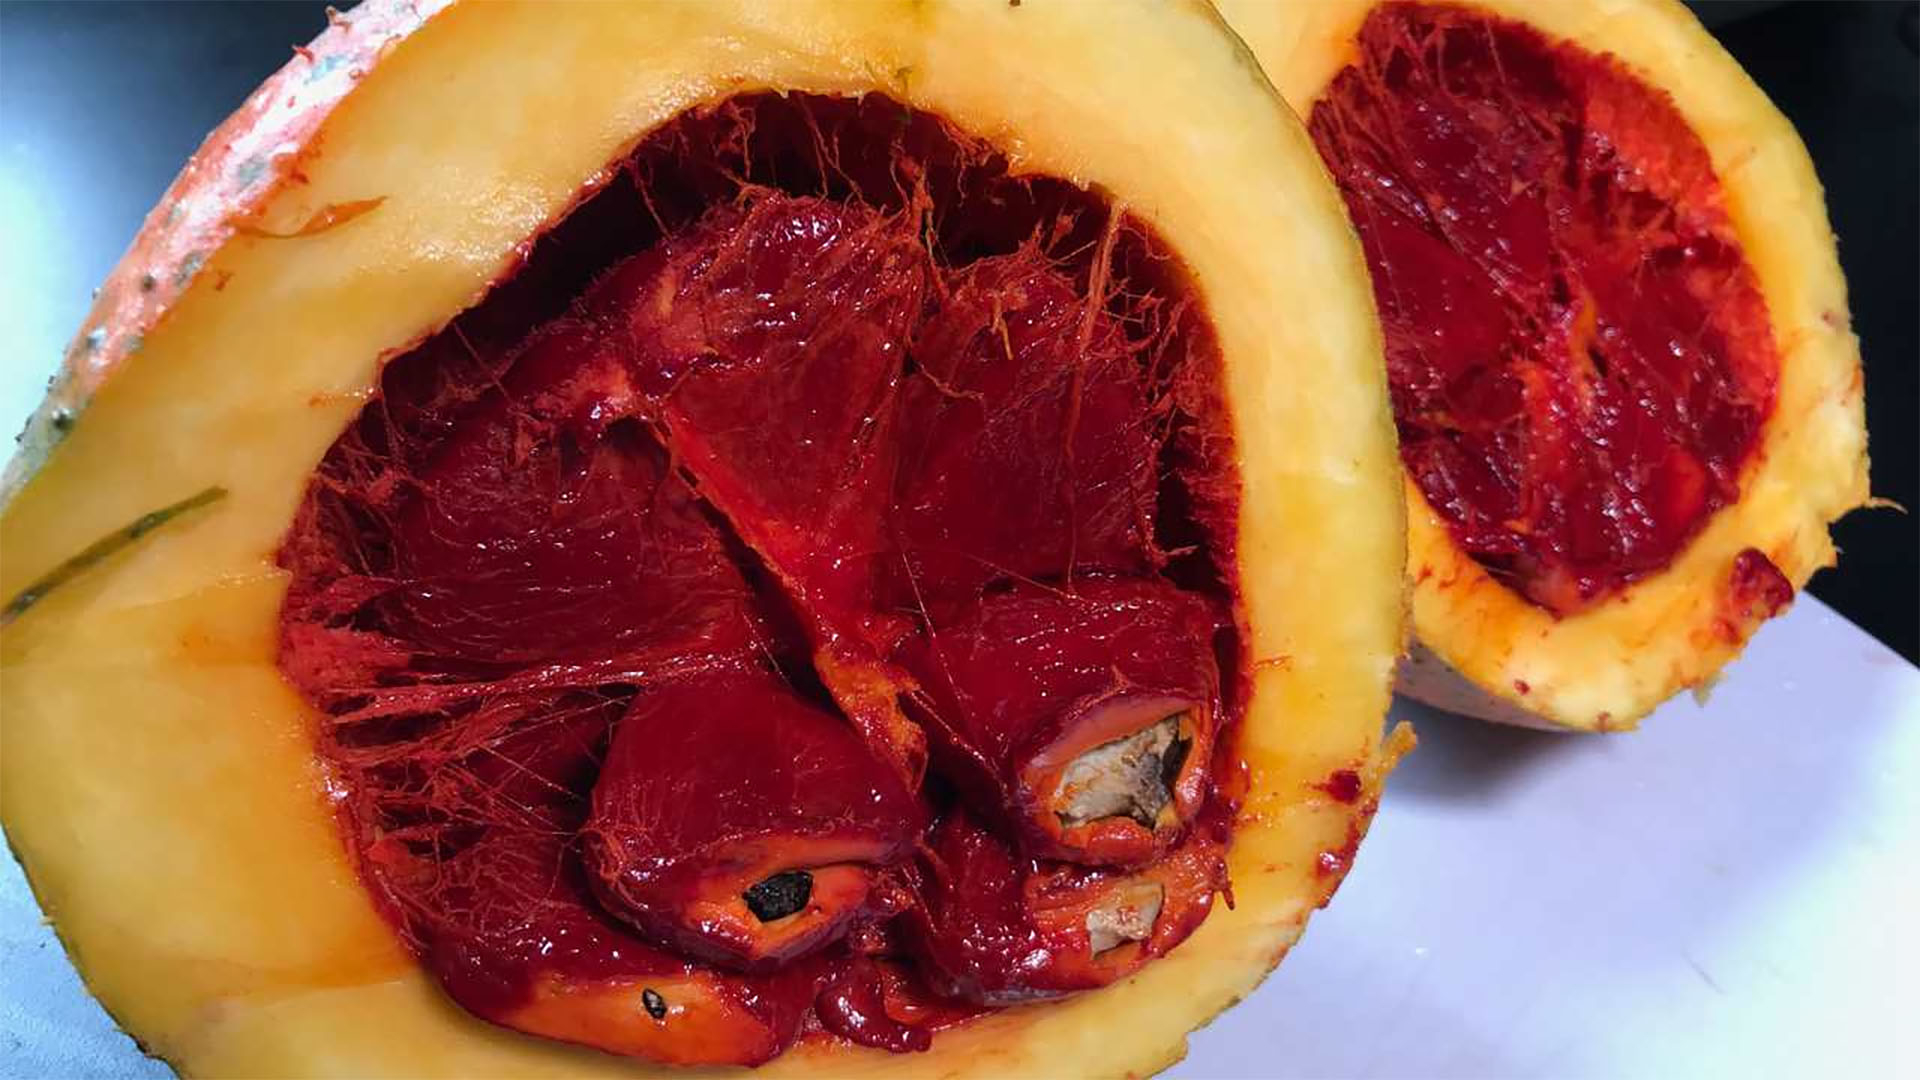 vietnamese orange fruit